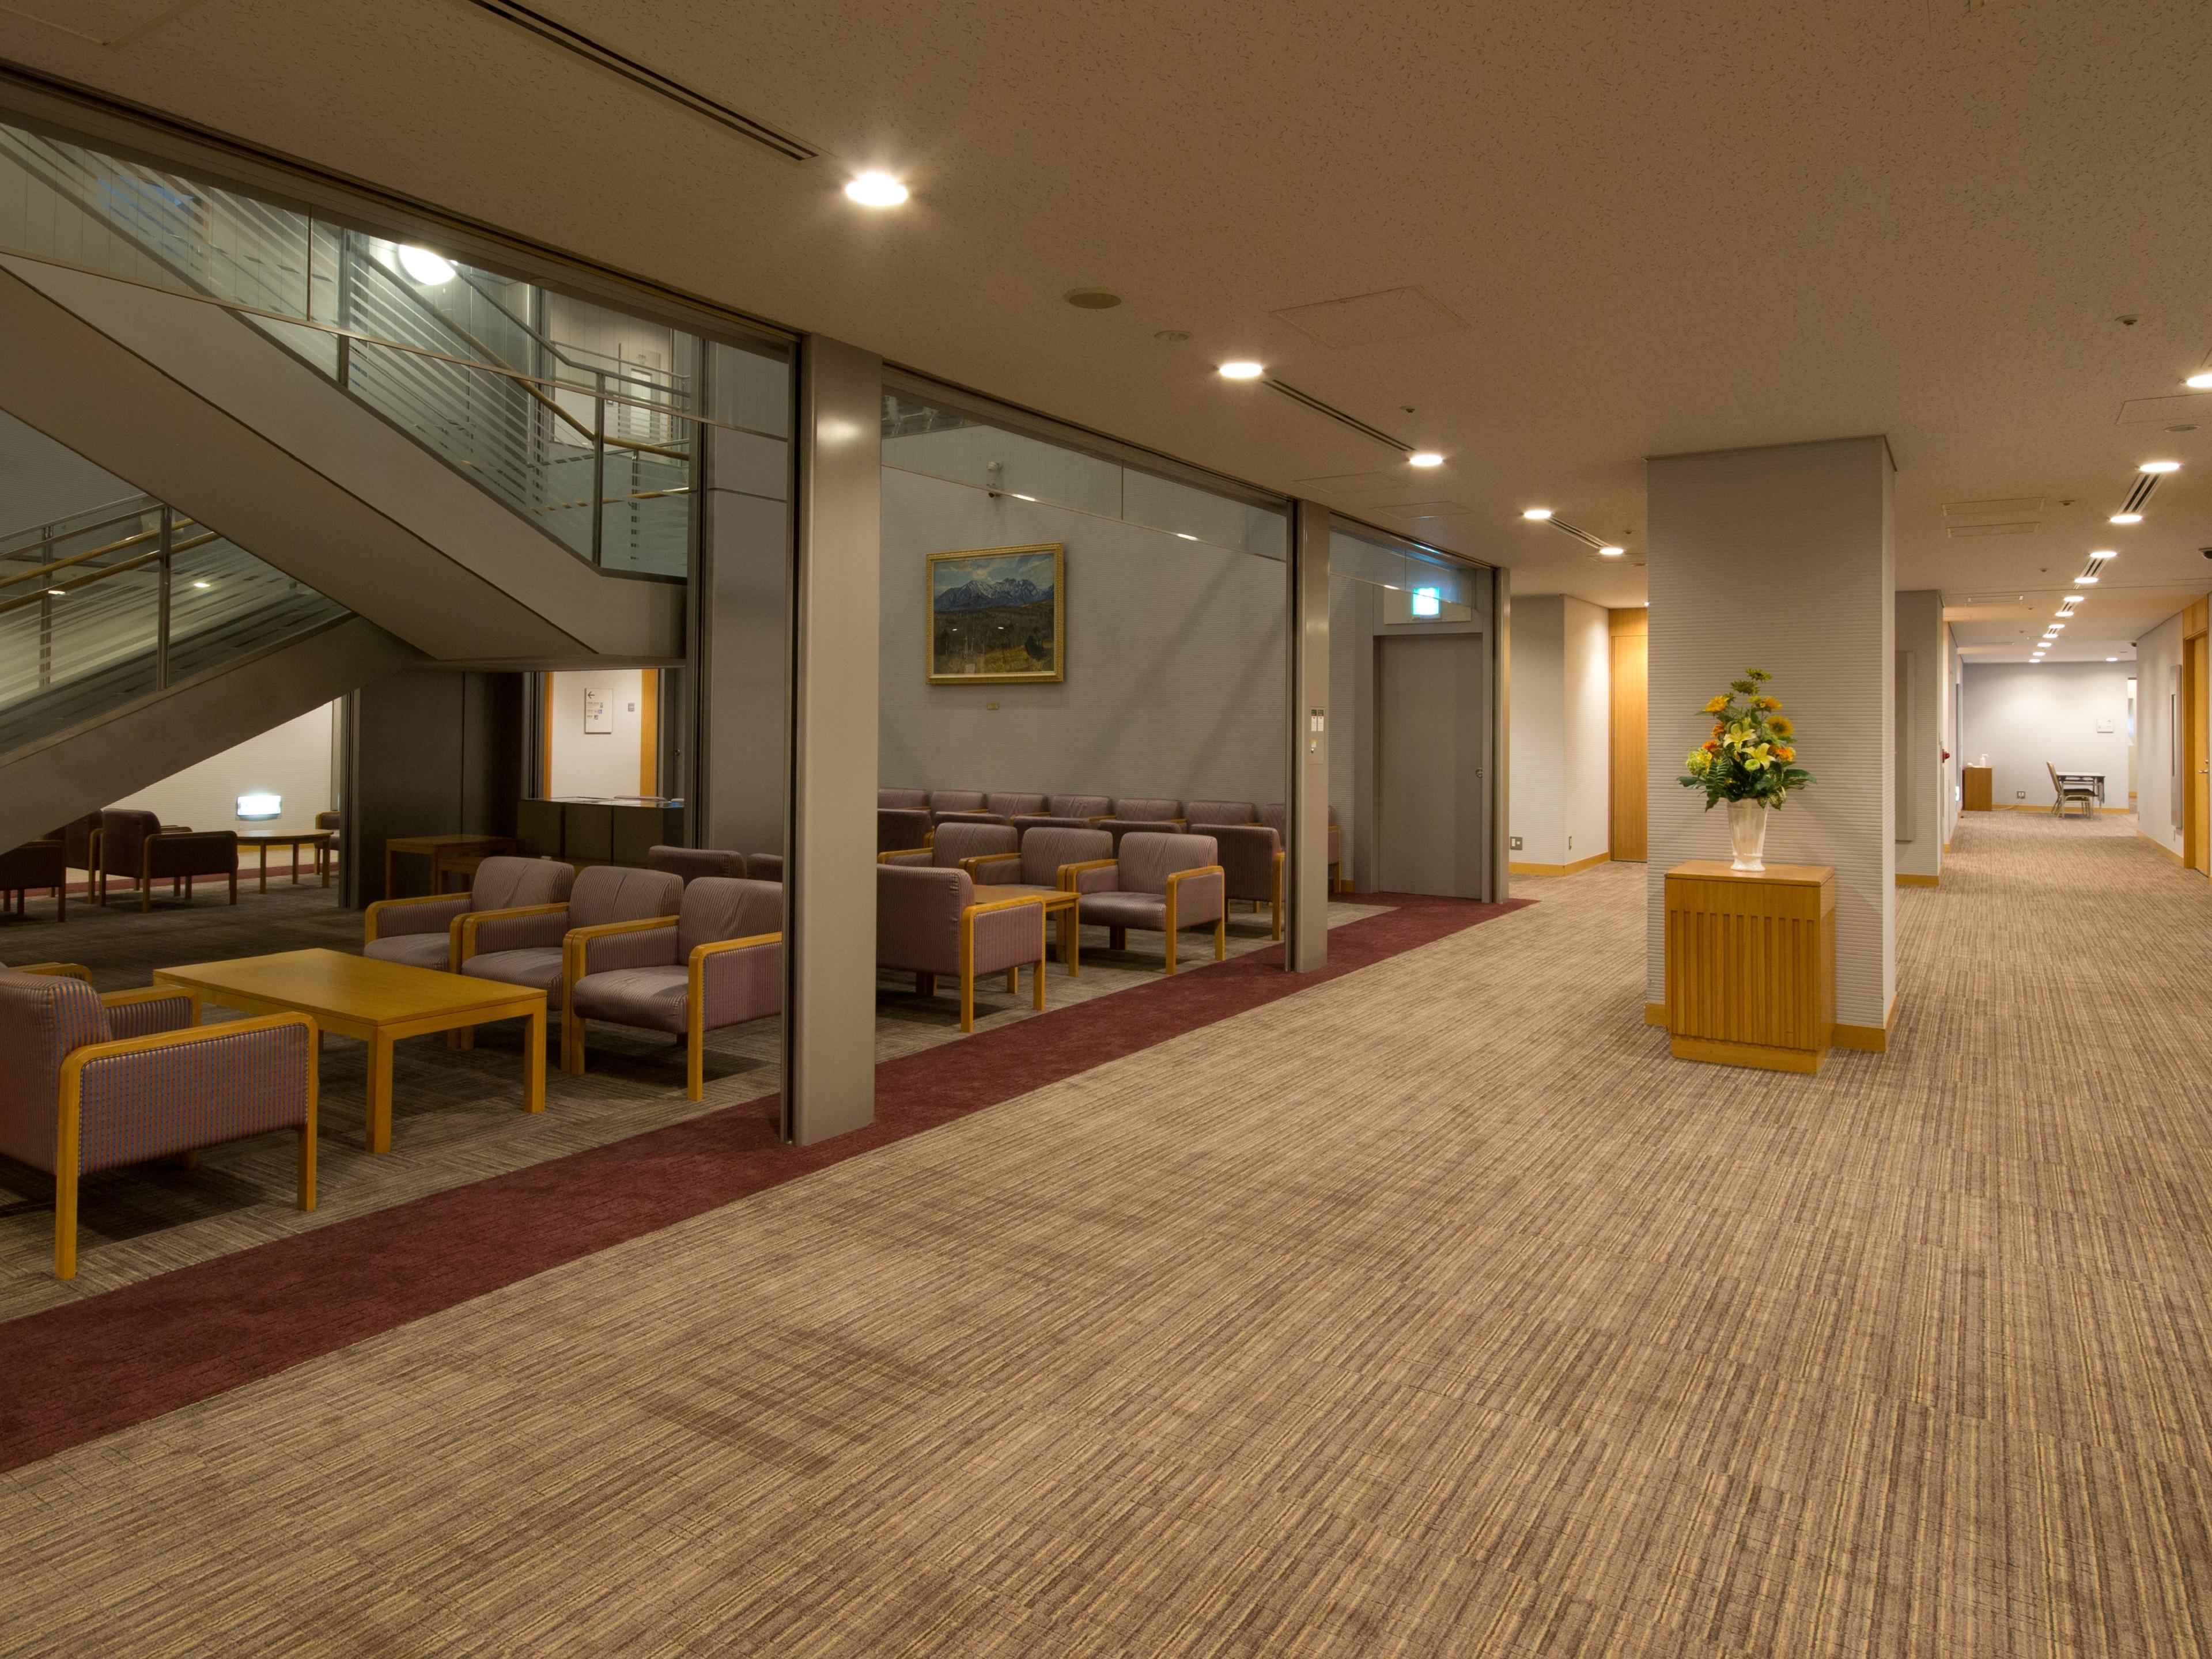 Toshi Center Hotel Präfektur Tokio Exterior foto